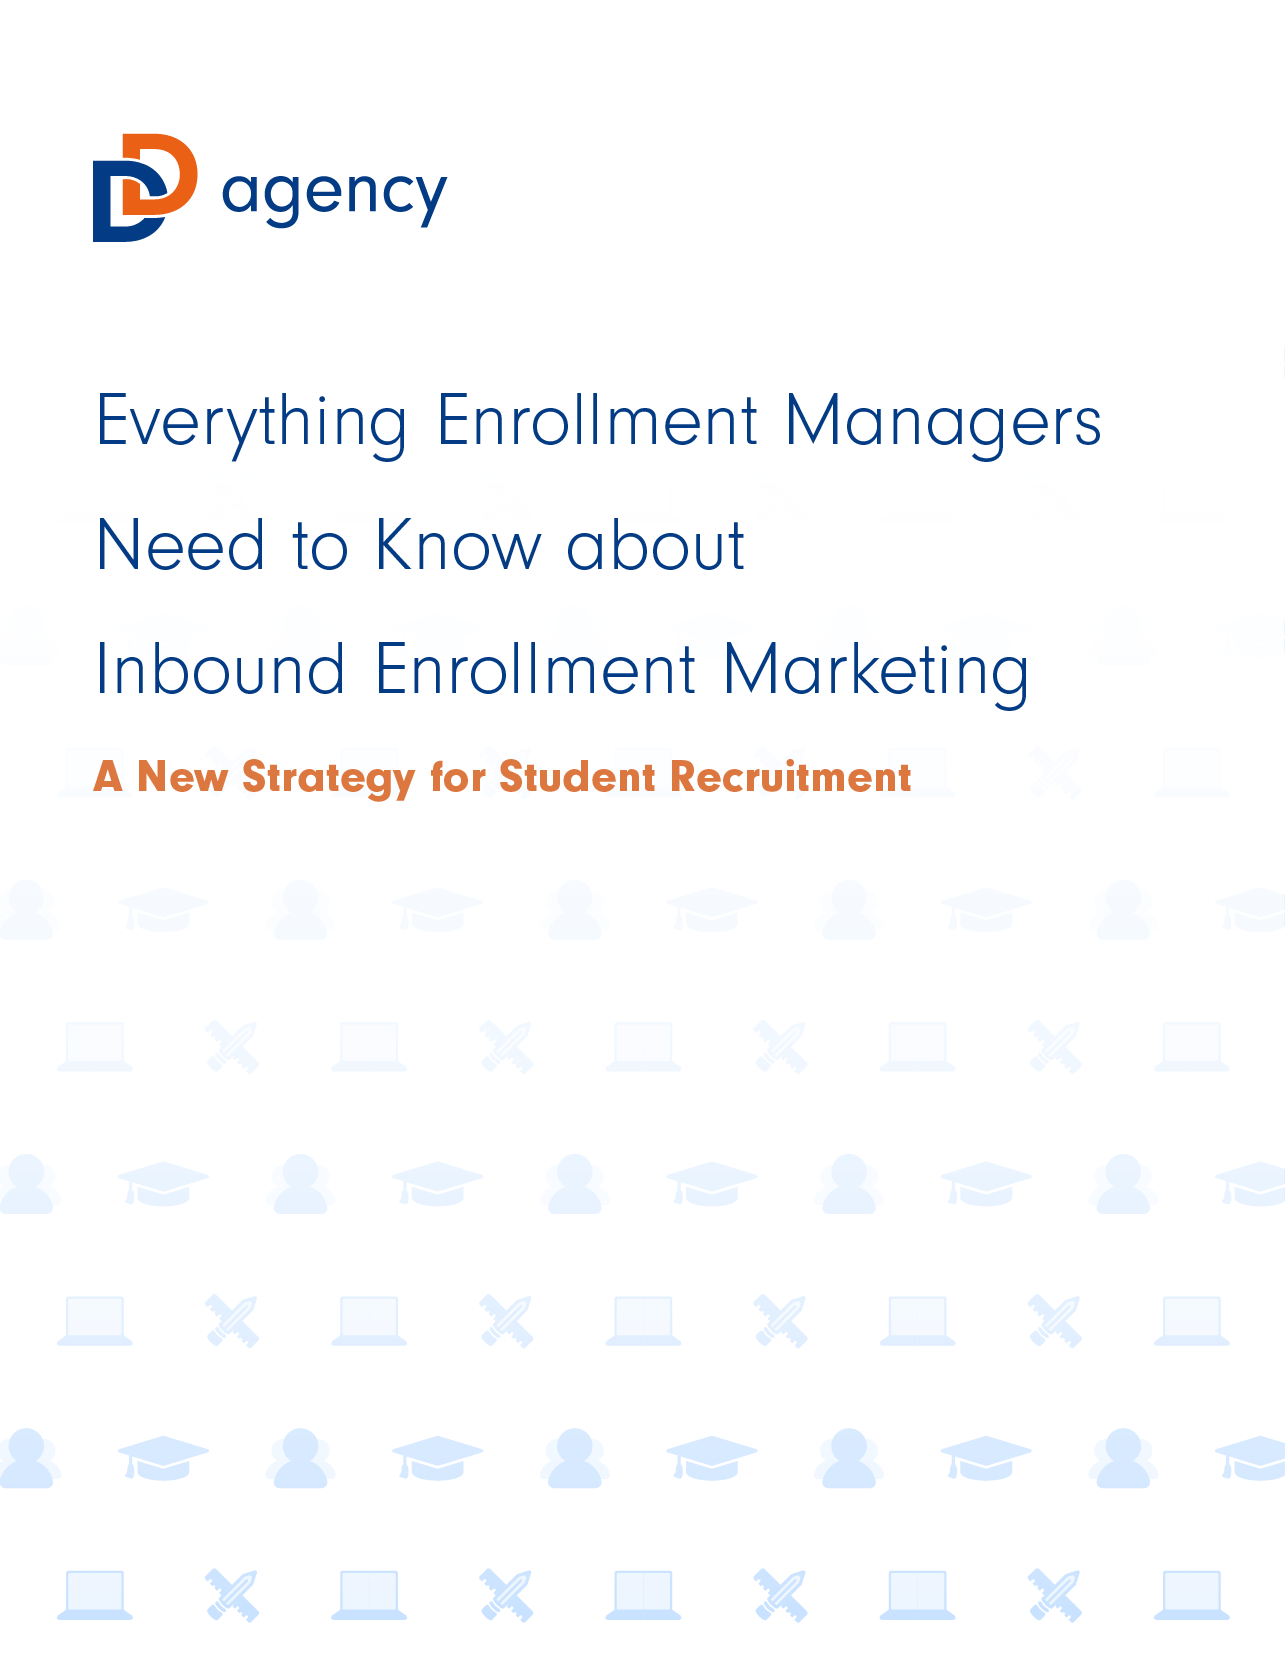 Inbound-enrollment-marketing-cov-v2-03